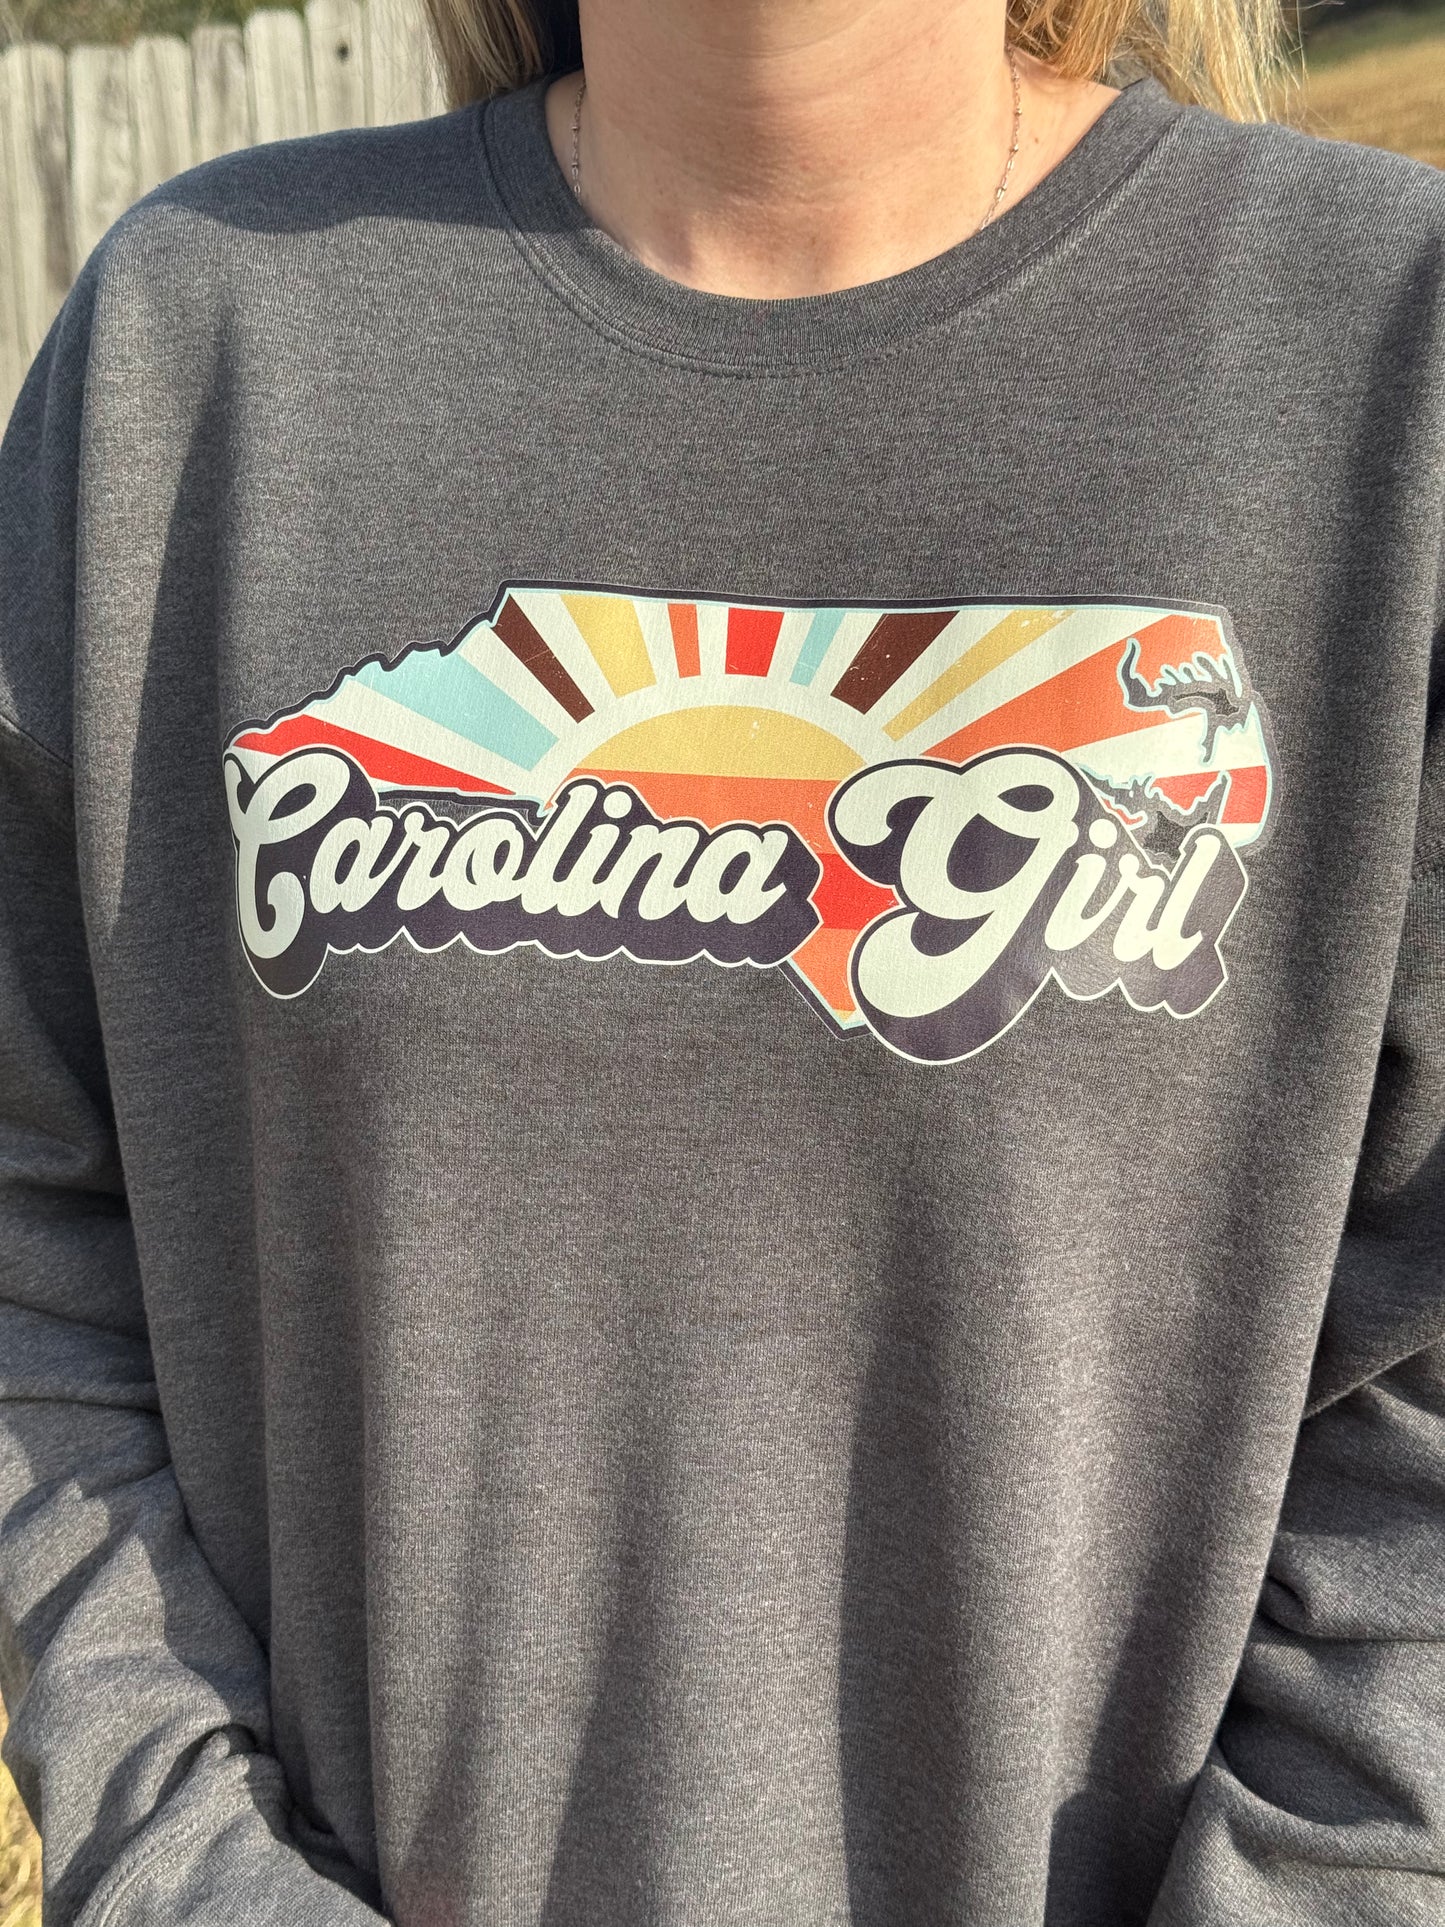 Carolina Girl Sweatshirt